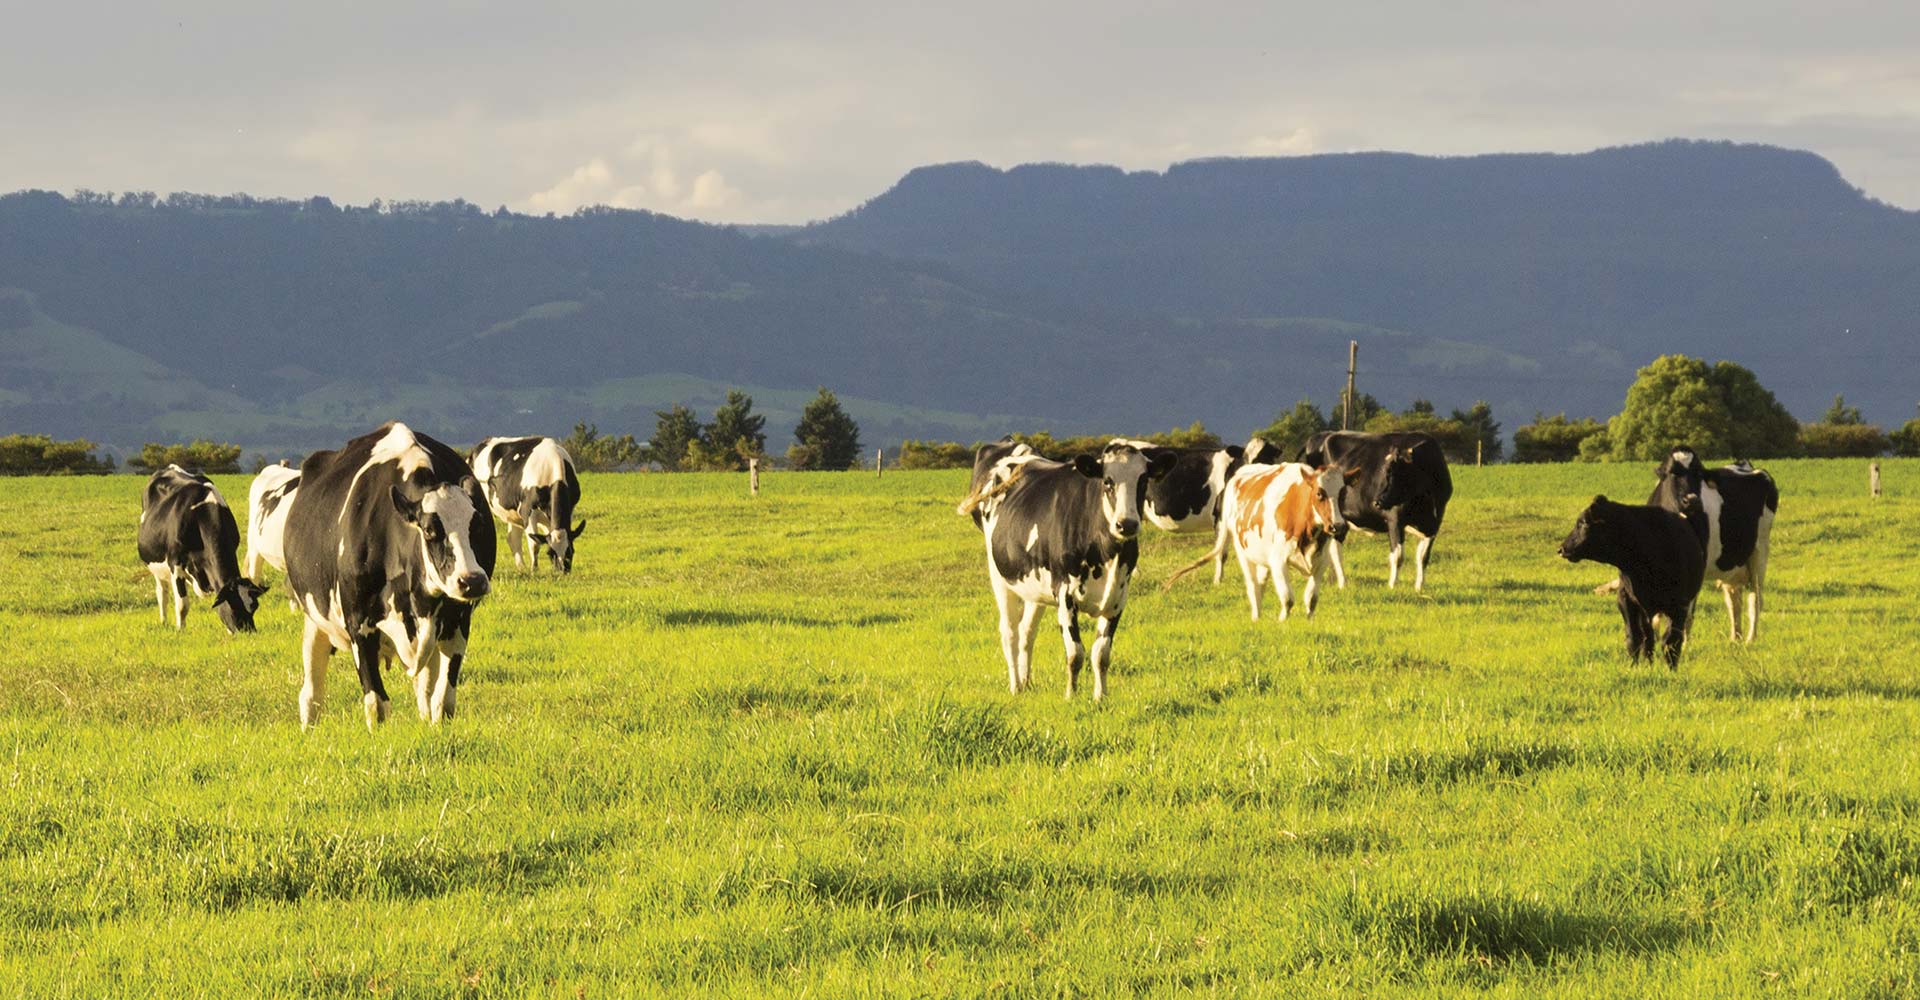 Cows enjoying a lush, green pasture